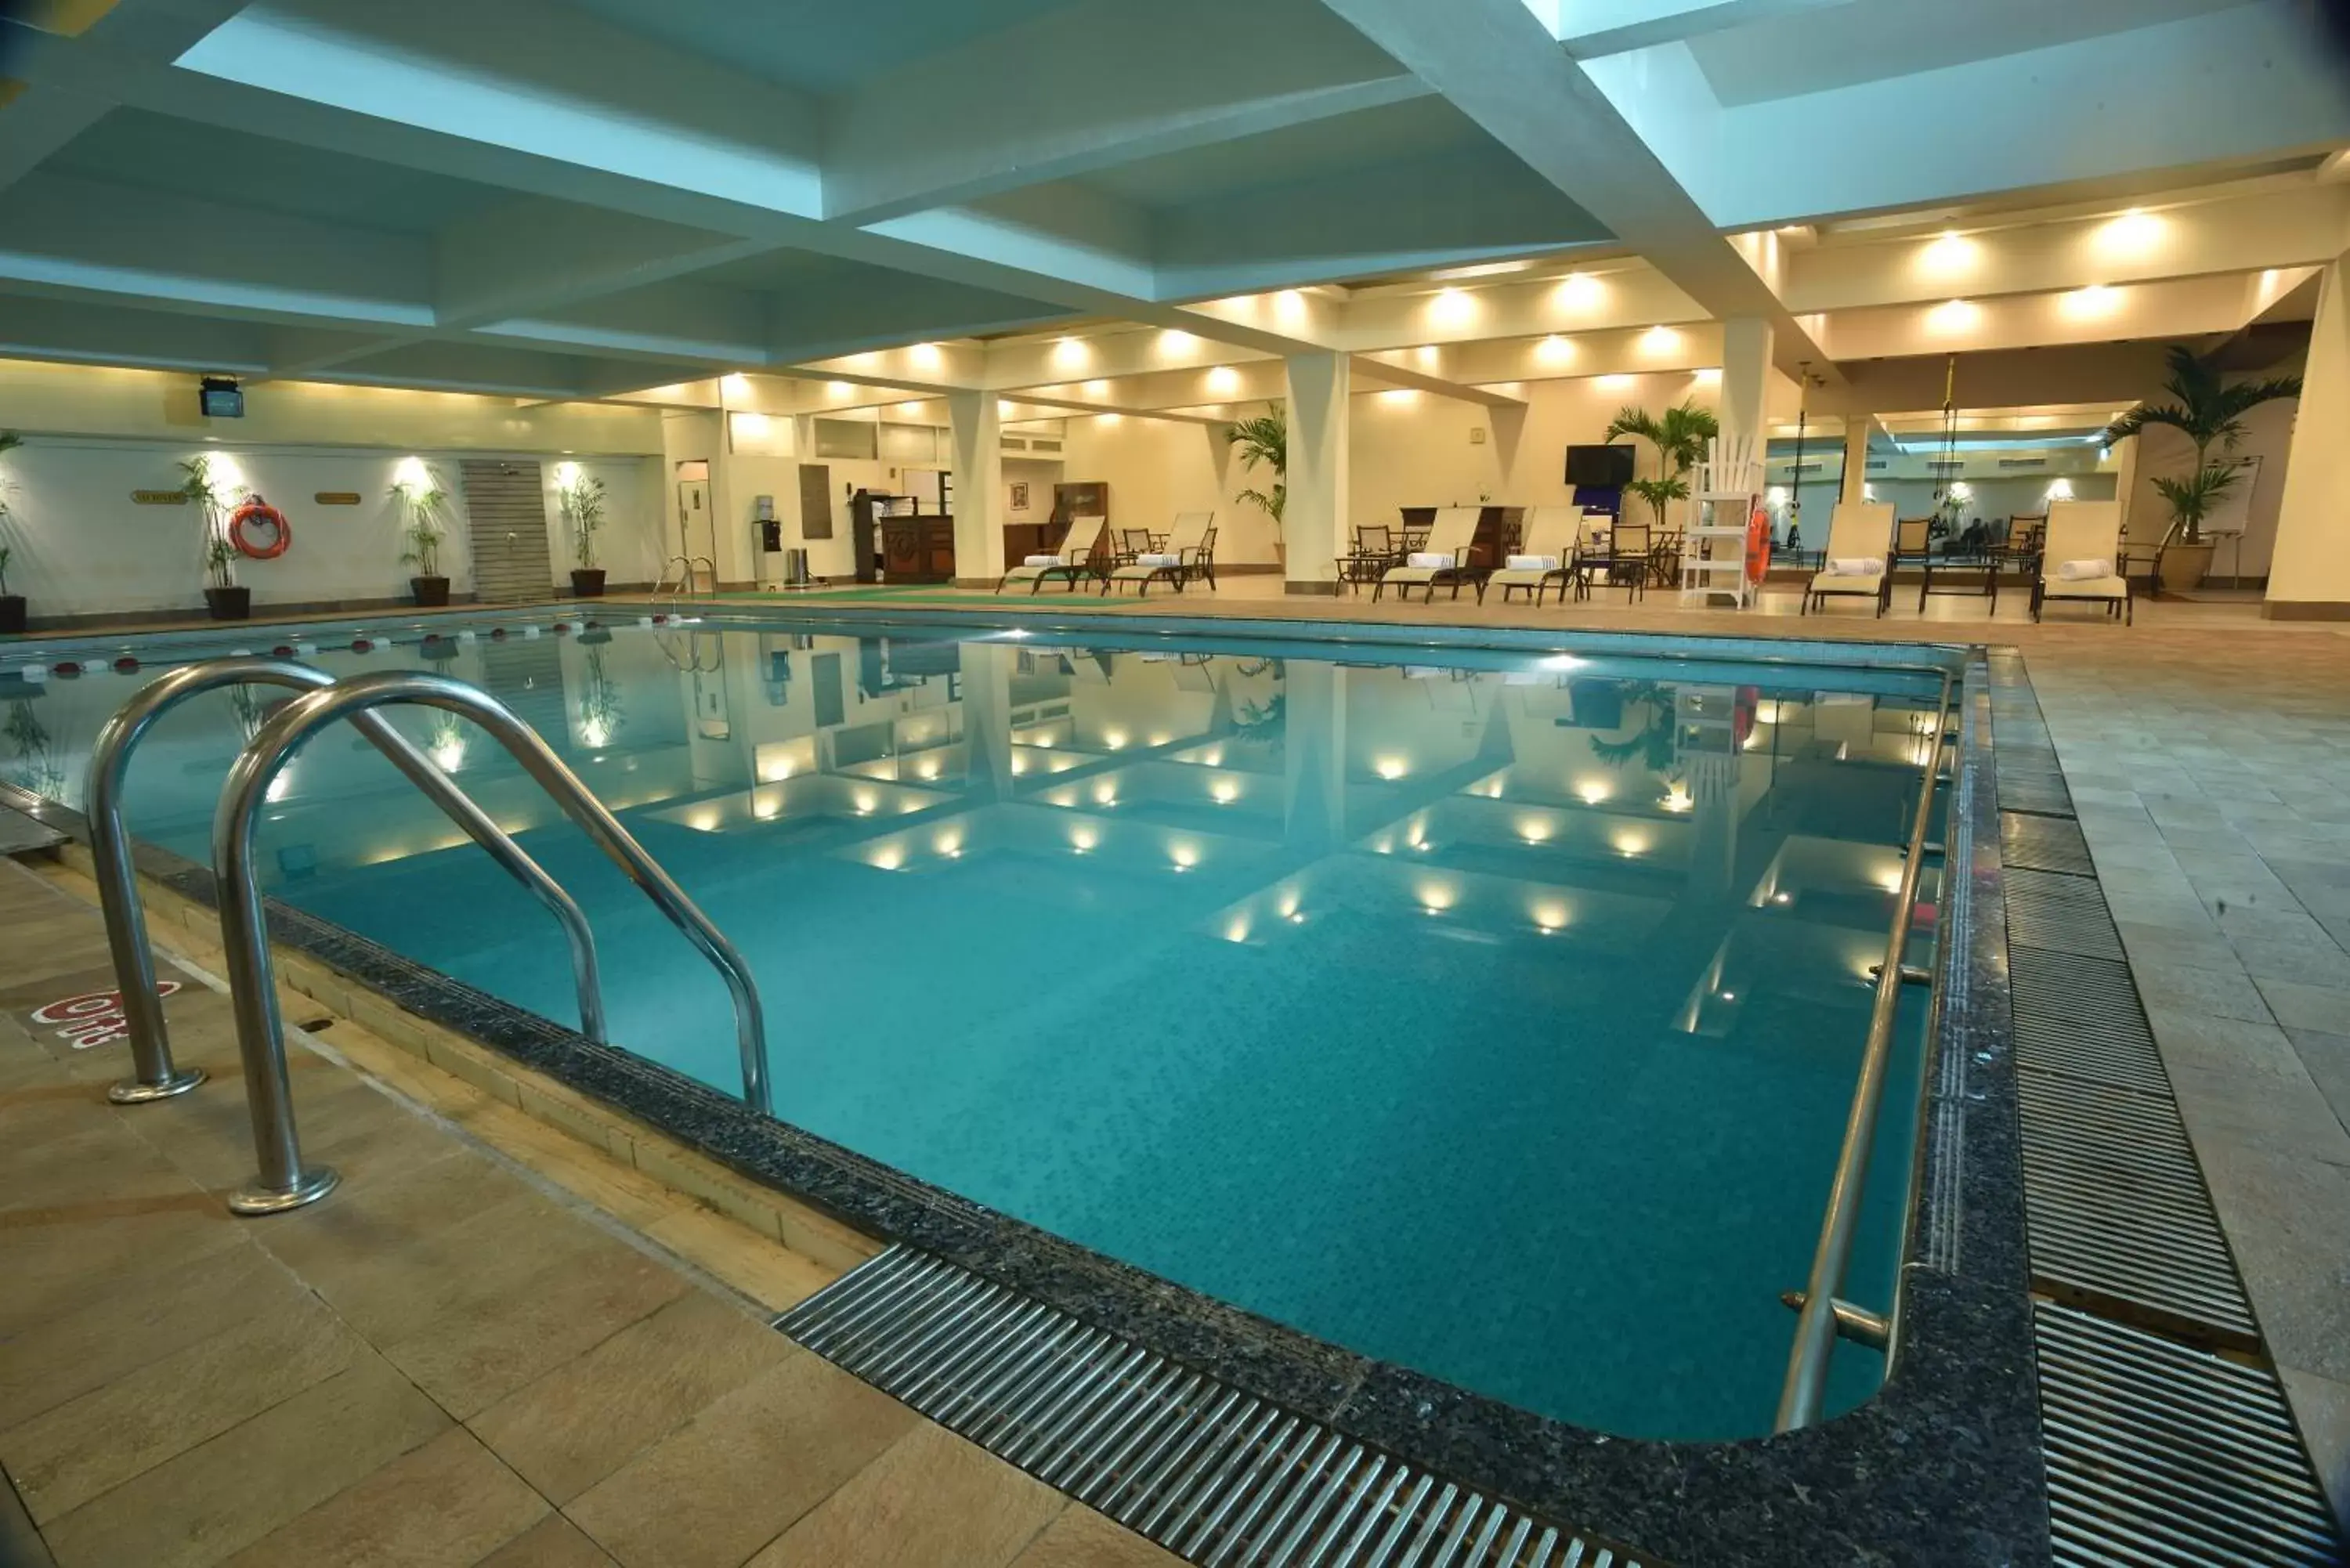 Swimming Pool in Pearl Continental Hotel, Karachi